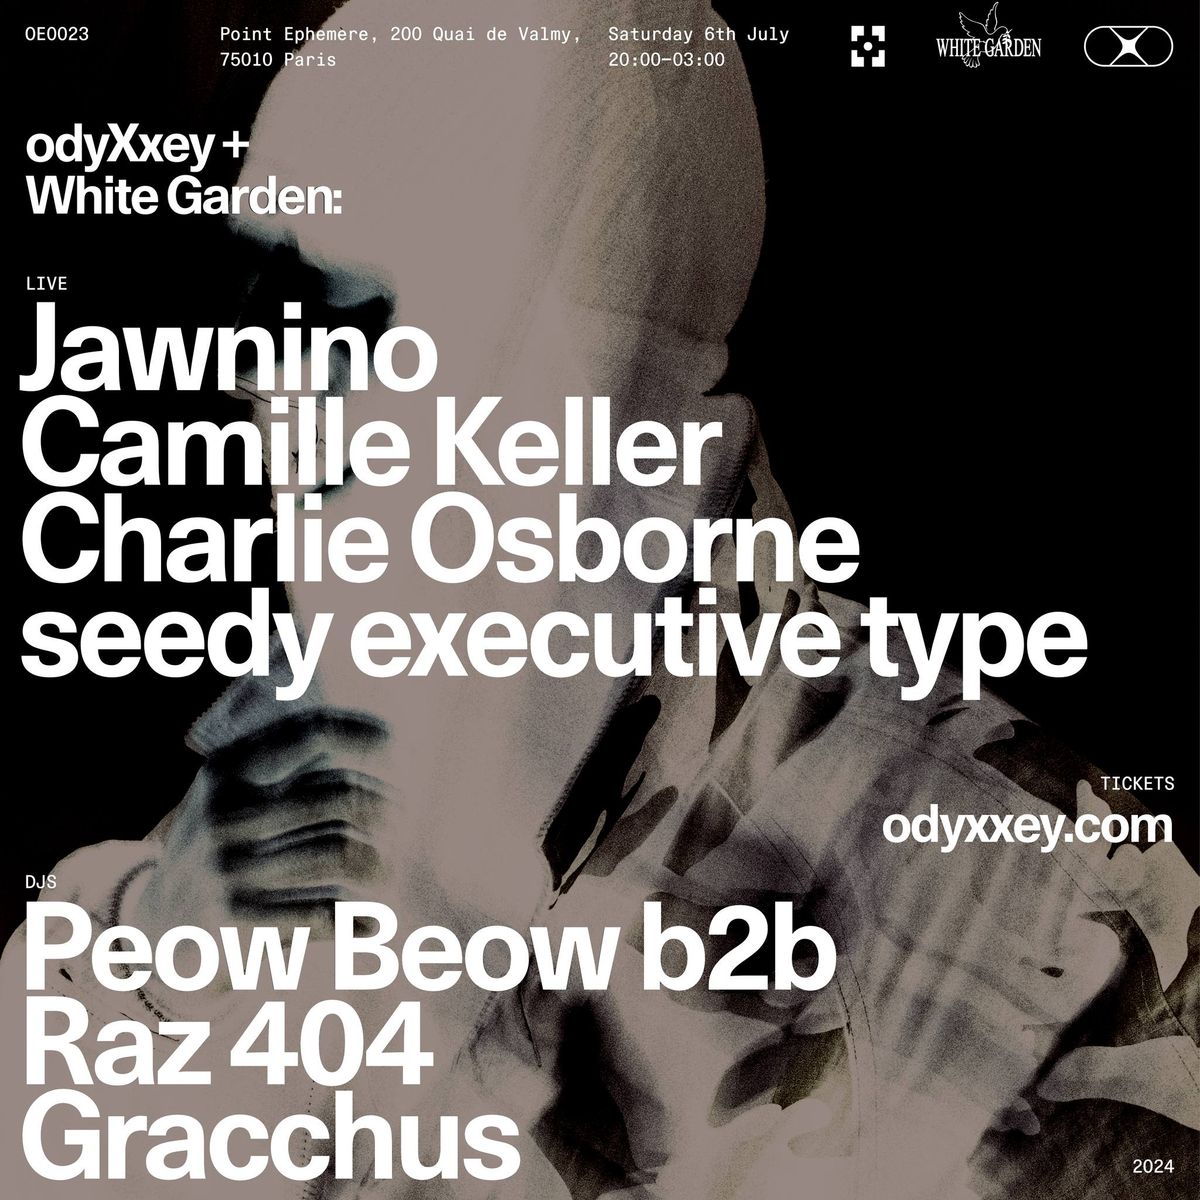 White Garden x odyXxey @Point FMR, Jawnino, Camille Keller, Charlie Osborne, seedy excutive type...